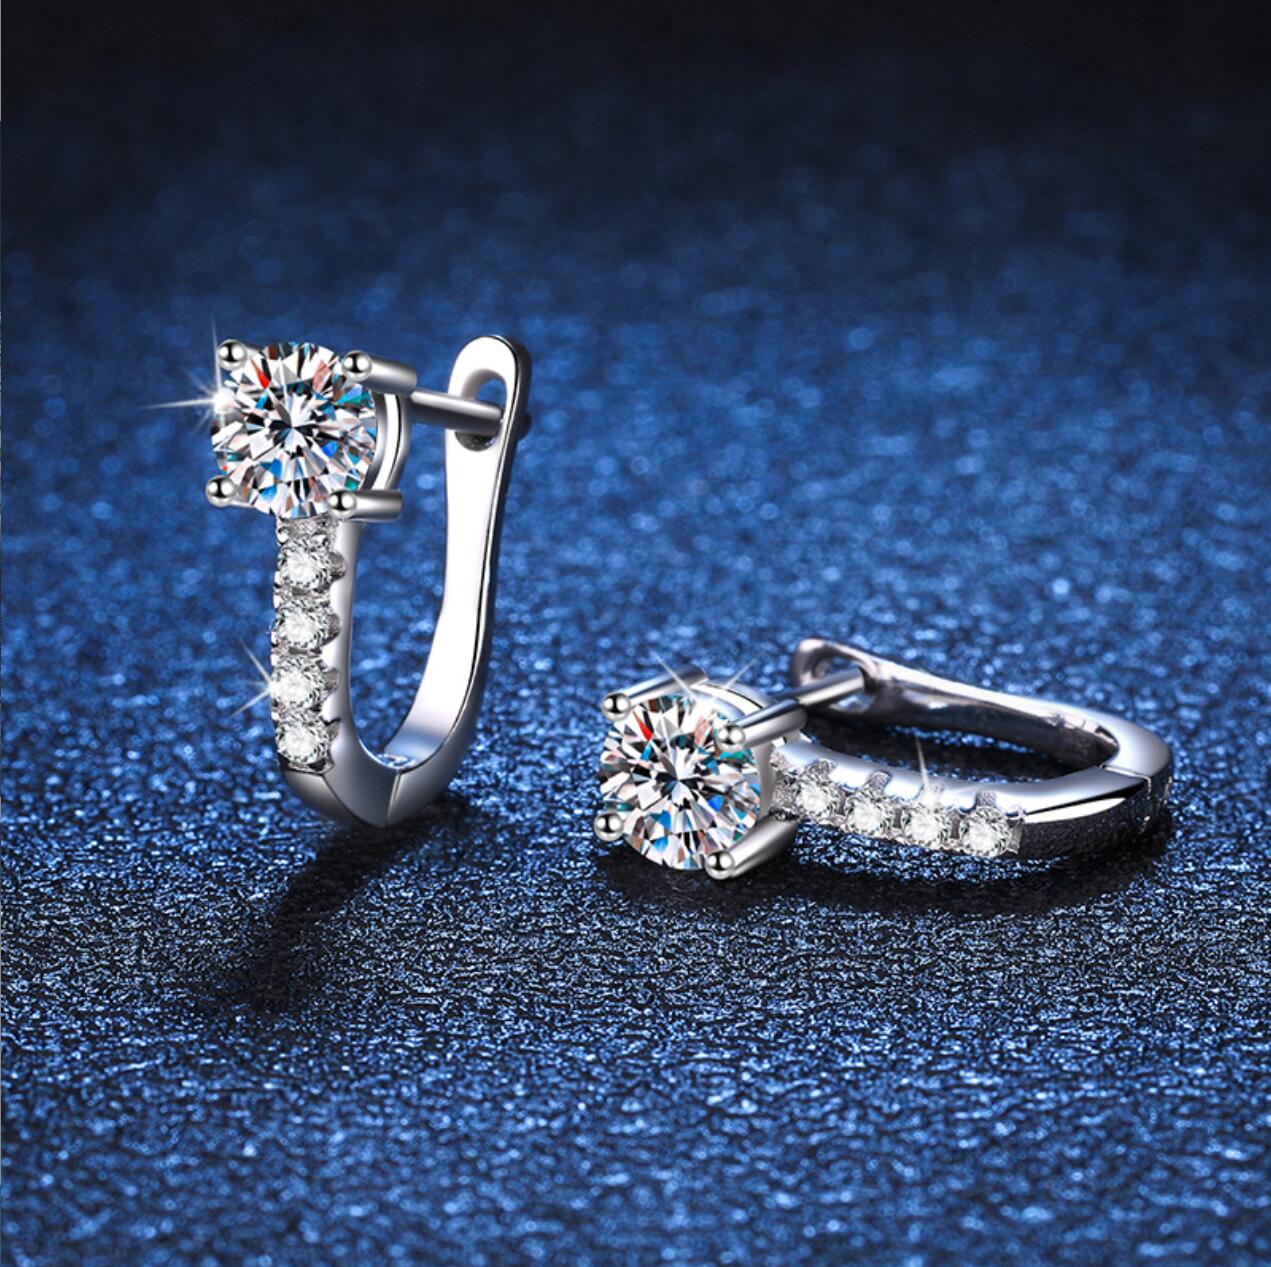 U Model Earring Real Moissanite 0.5 Ct Decor Silvery Stud Earrings Sterling 925 Silver Jewelry Elegant Minimalist Style Daily Wear Accessories With Certificate